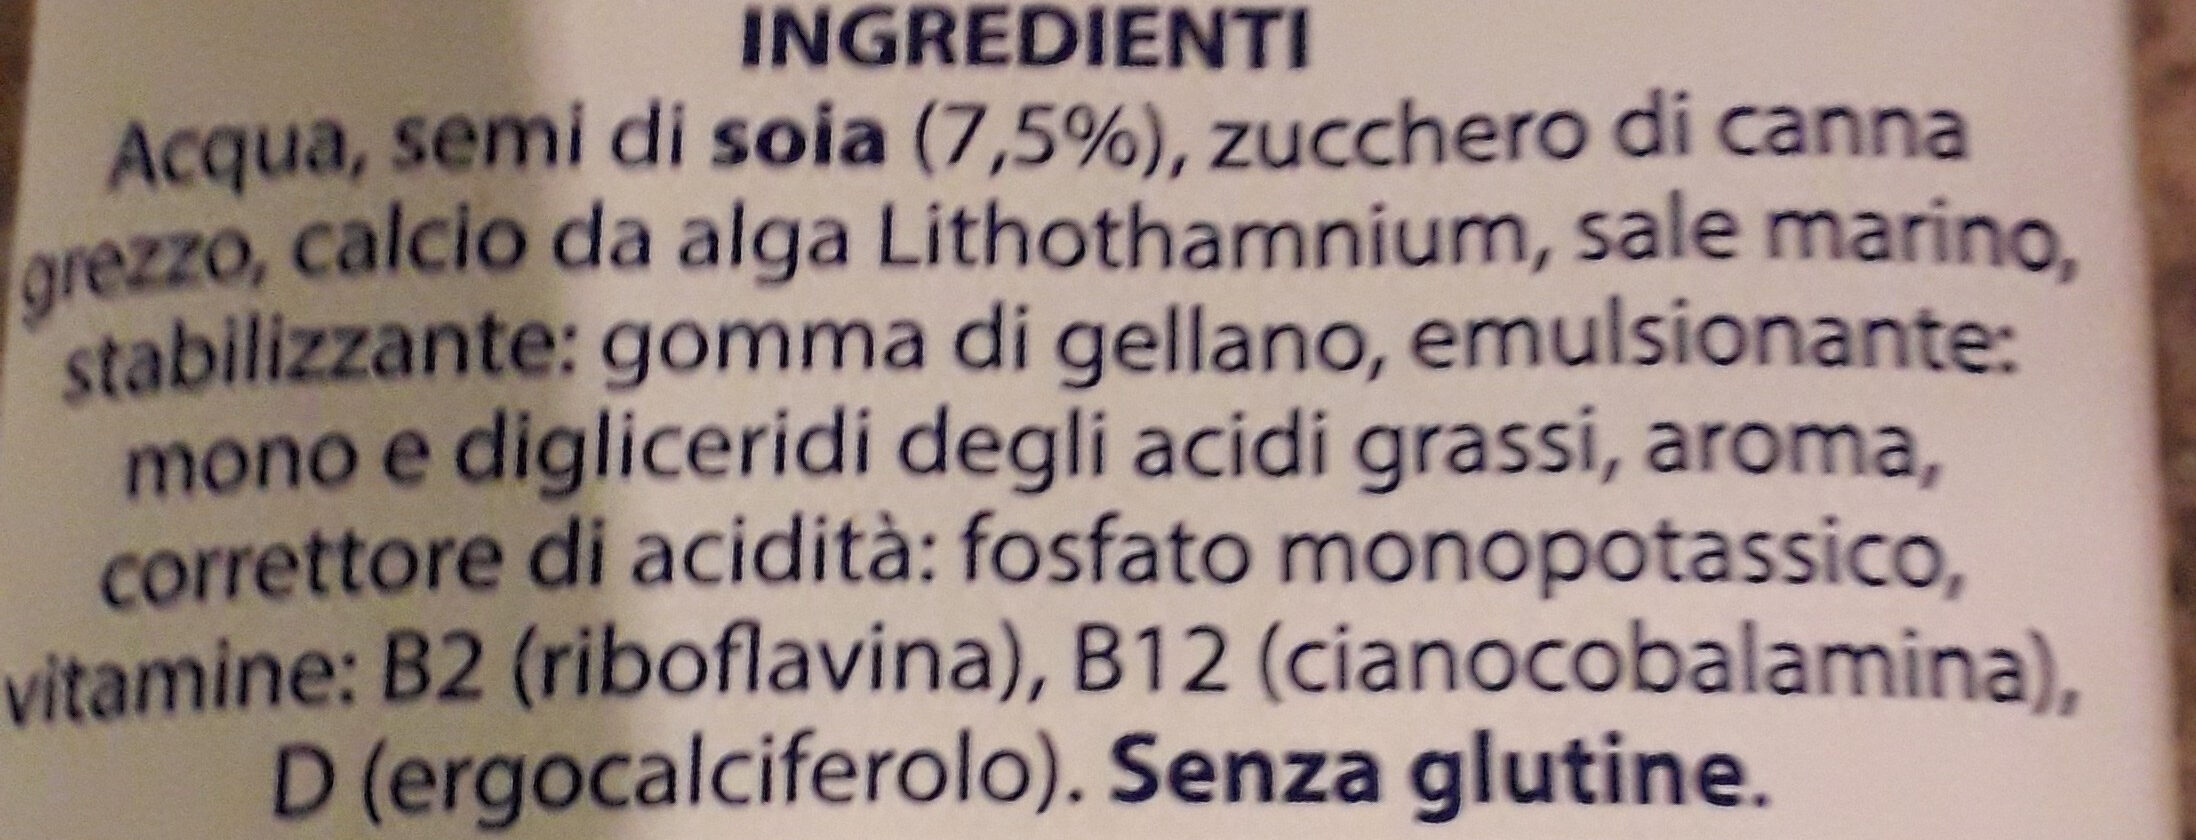 Le bevande vegetali Soia - Ingredienti